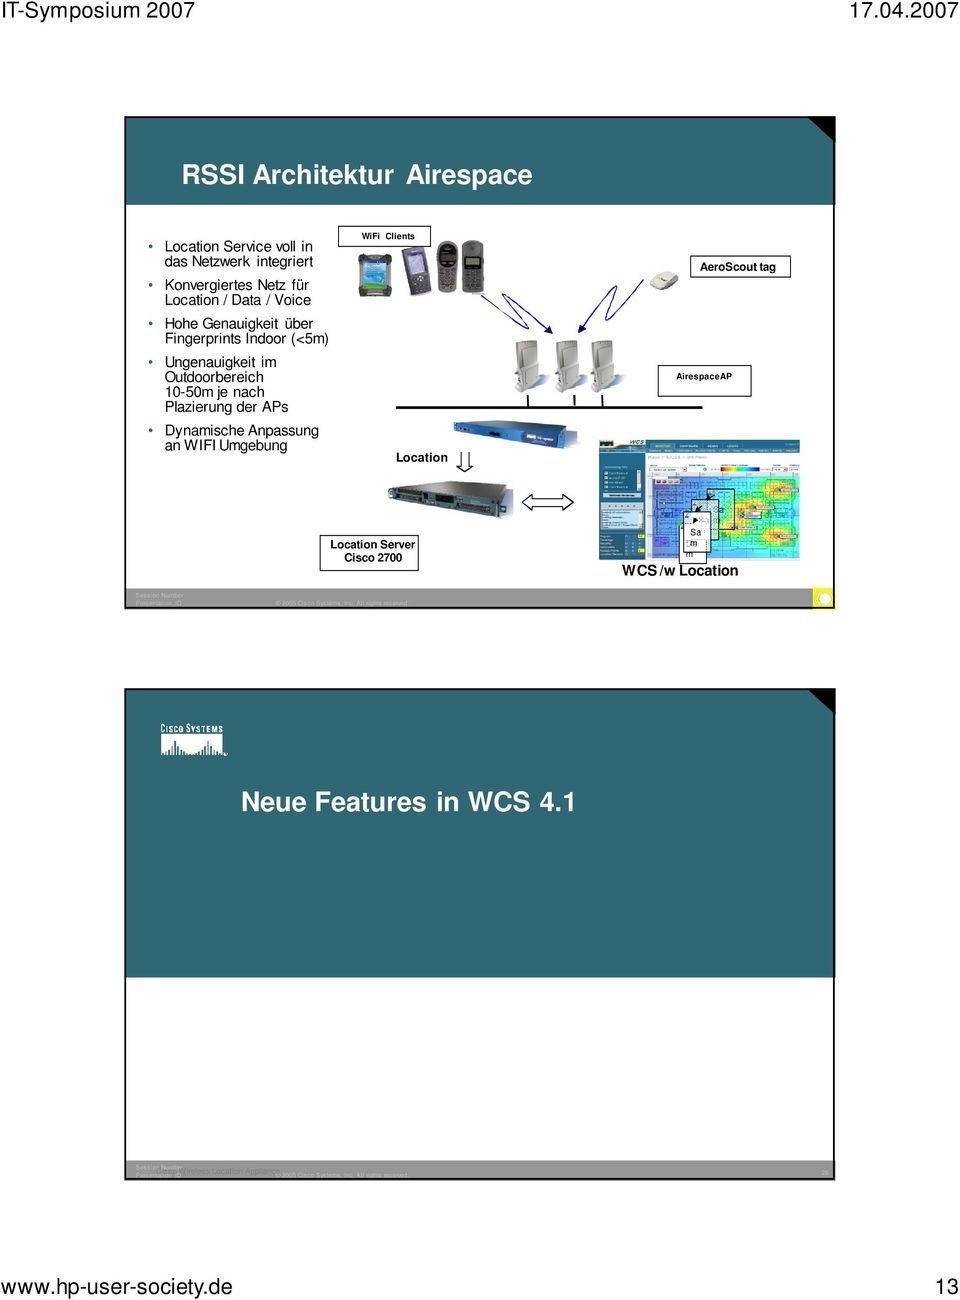 Anpassung an WIFI Umgebung WiFi Clients Asset Locator Location Server Cisco 2700 Location AeroScout Server AeroScout tag